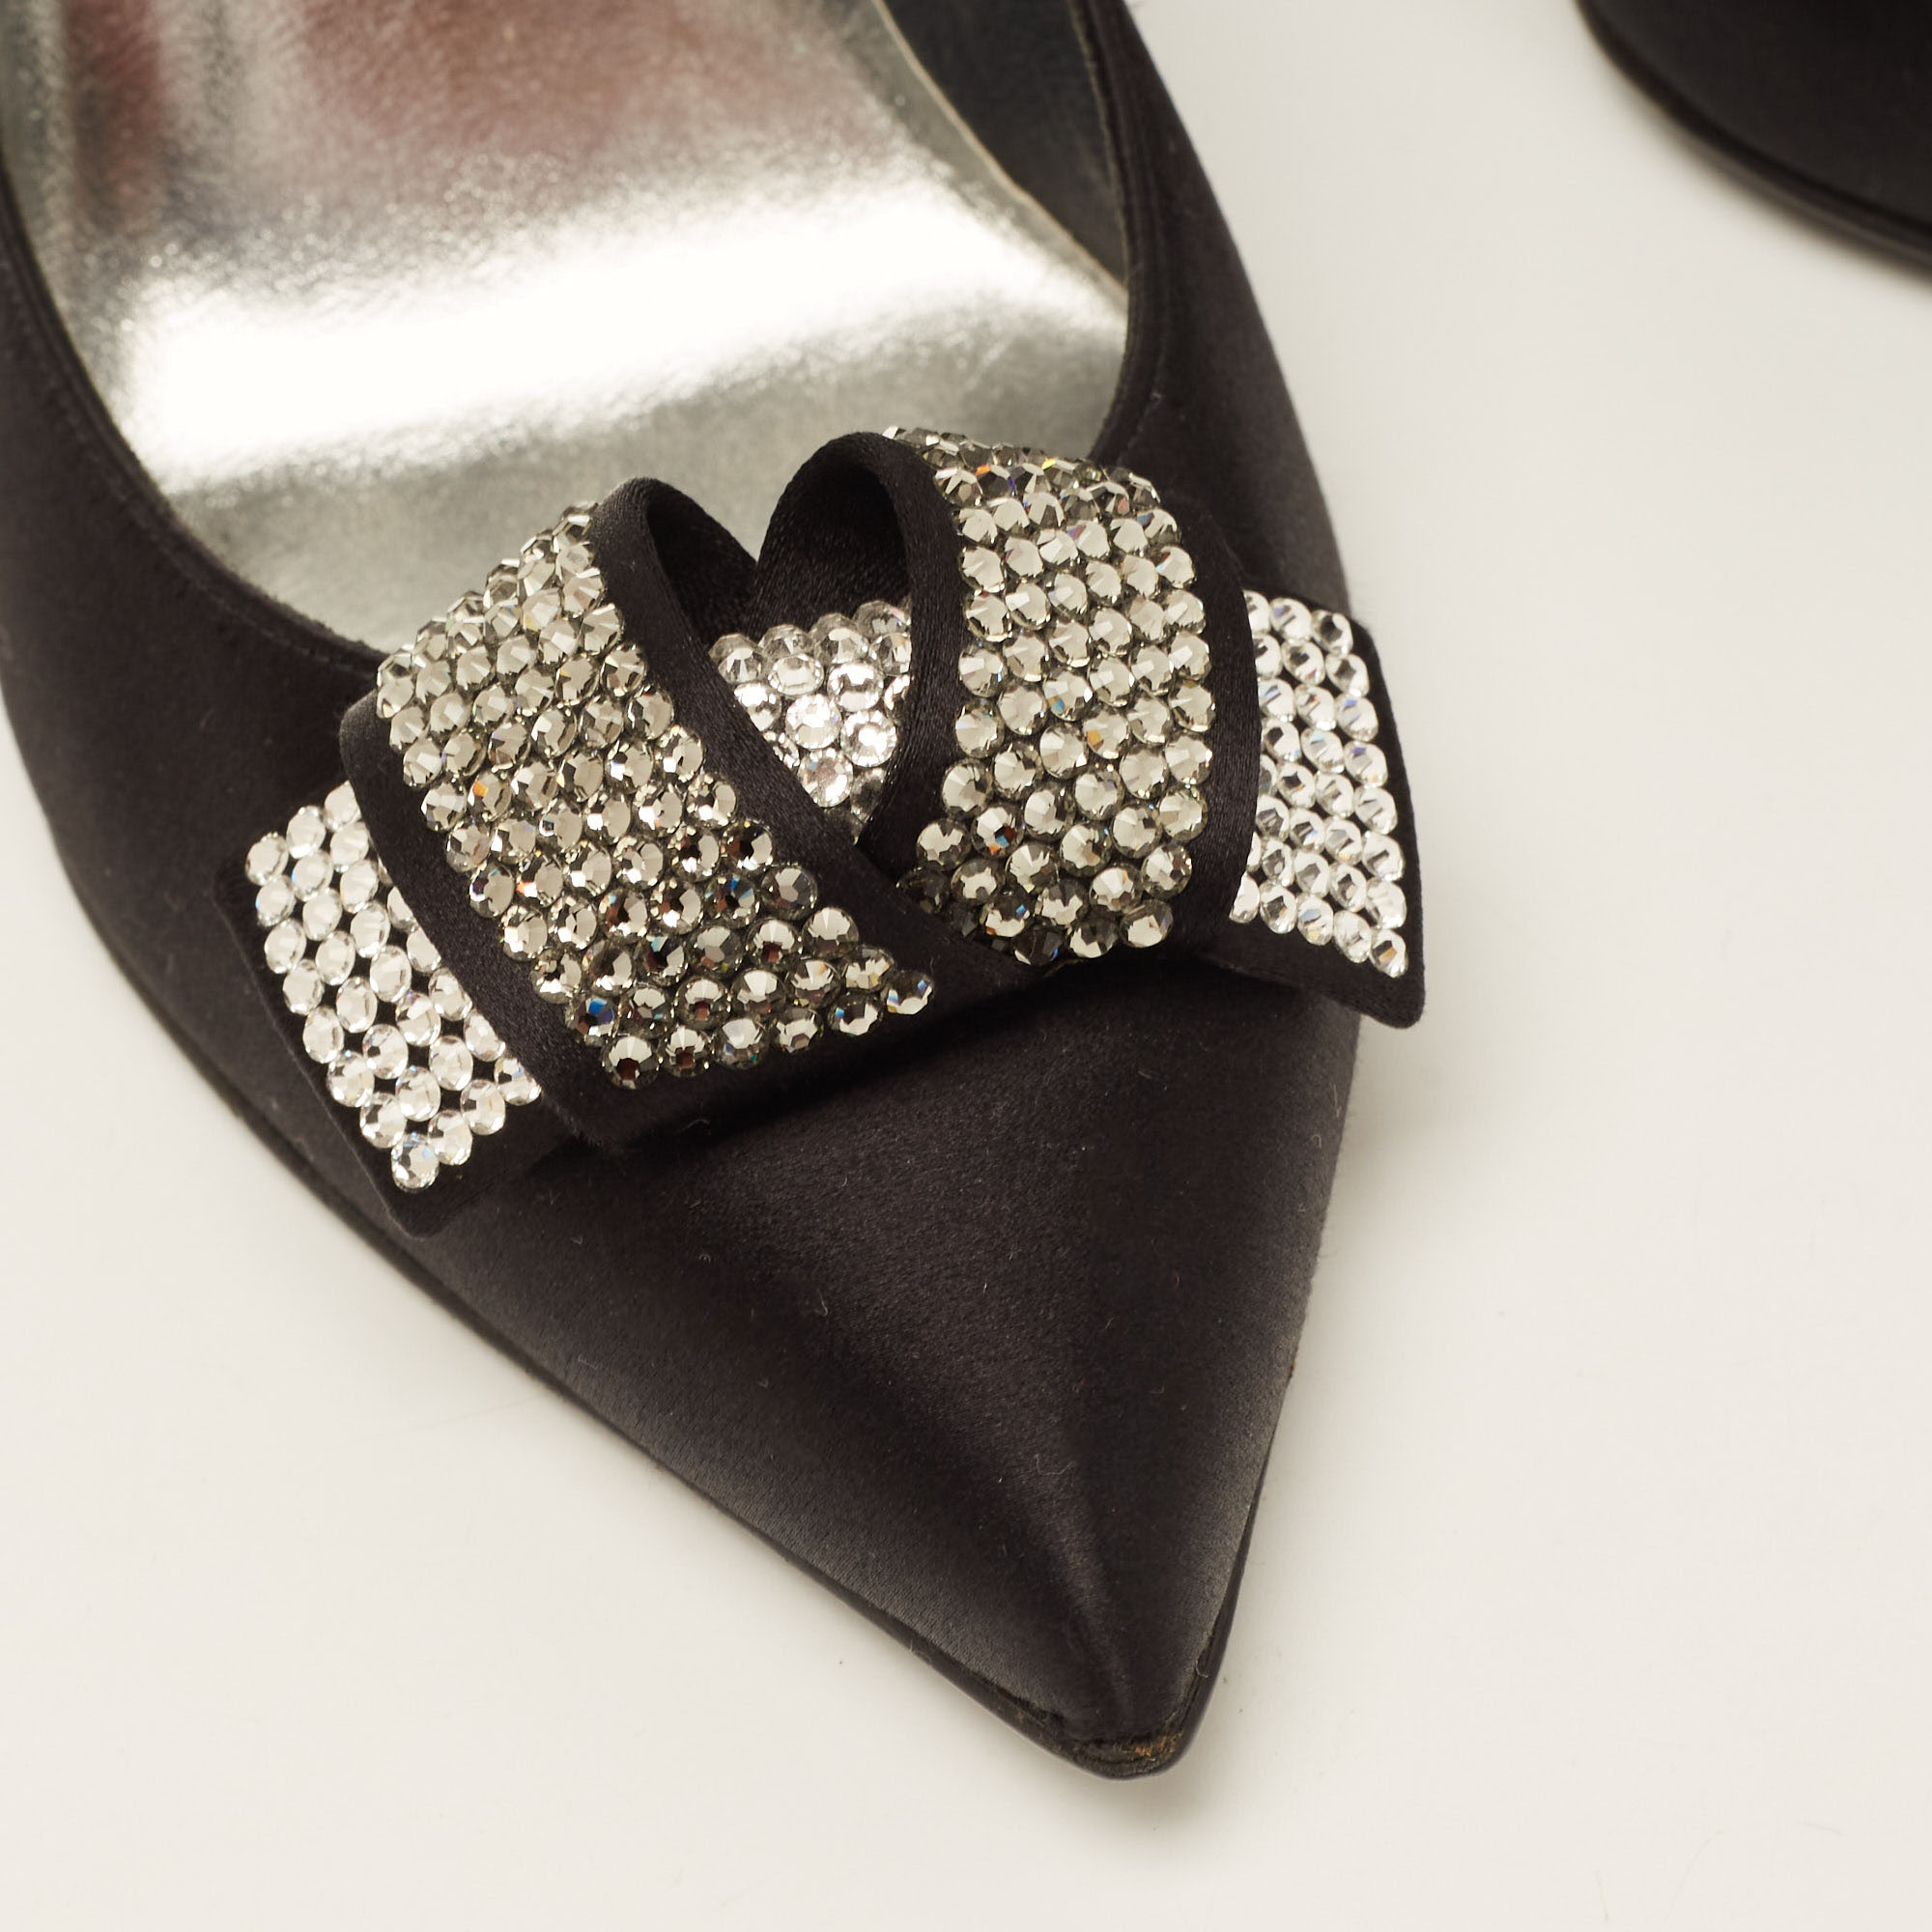 Stuart Weitzman Black Satin Crystal Embellished Bow Pointed Toe Pumps Size 39